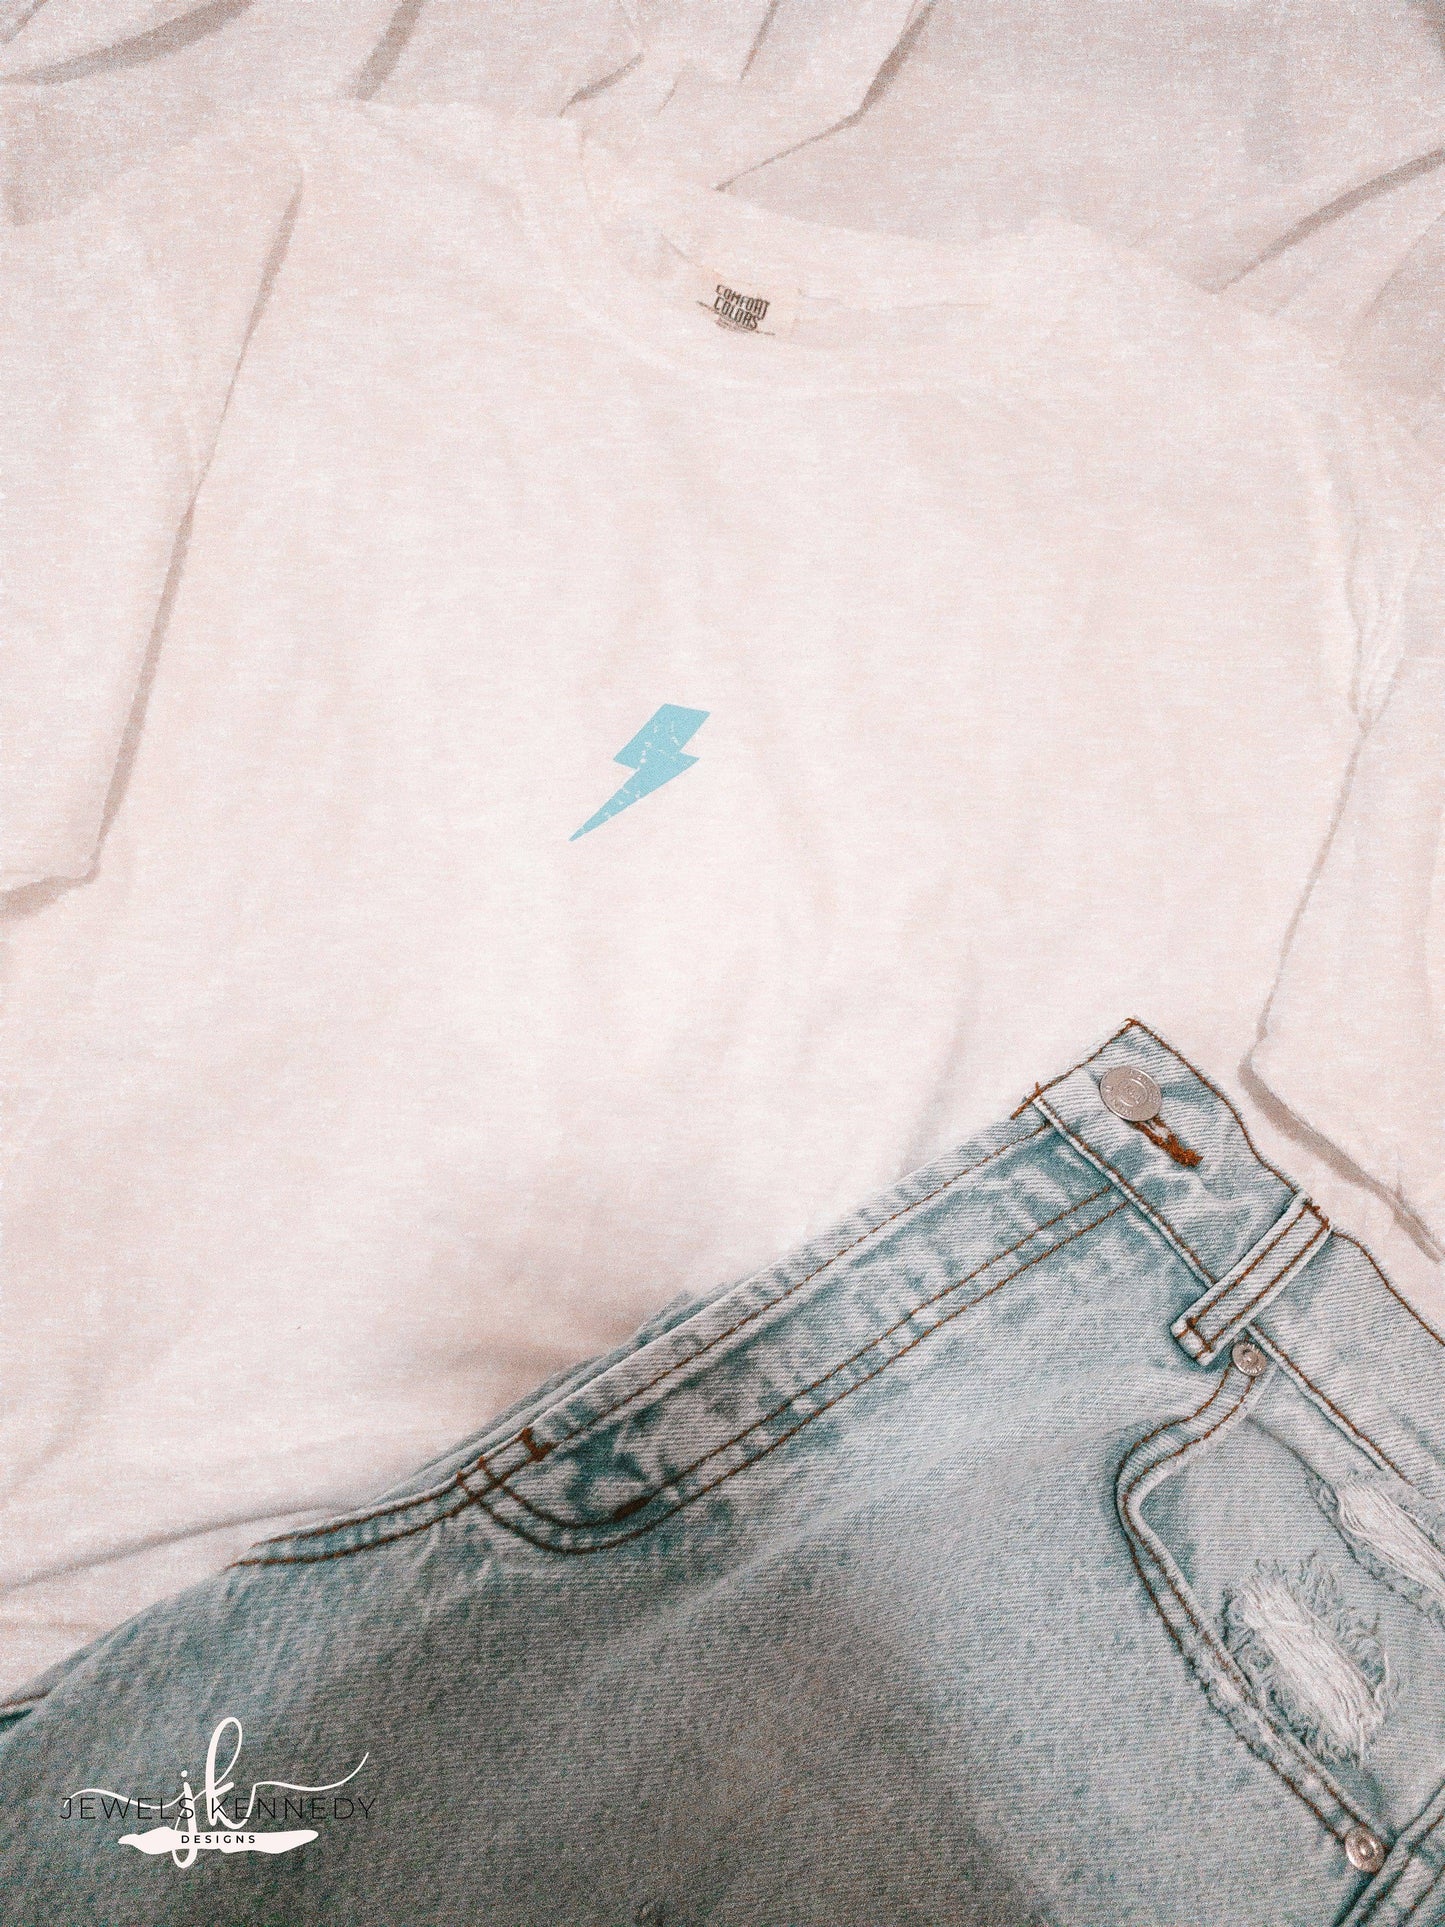 Lightning Bolt Comfort Colors Shirt - JEWELS KENNEDY DESIGNS